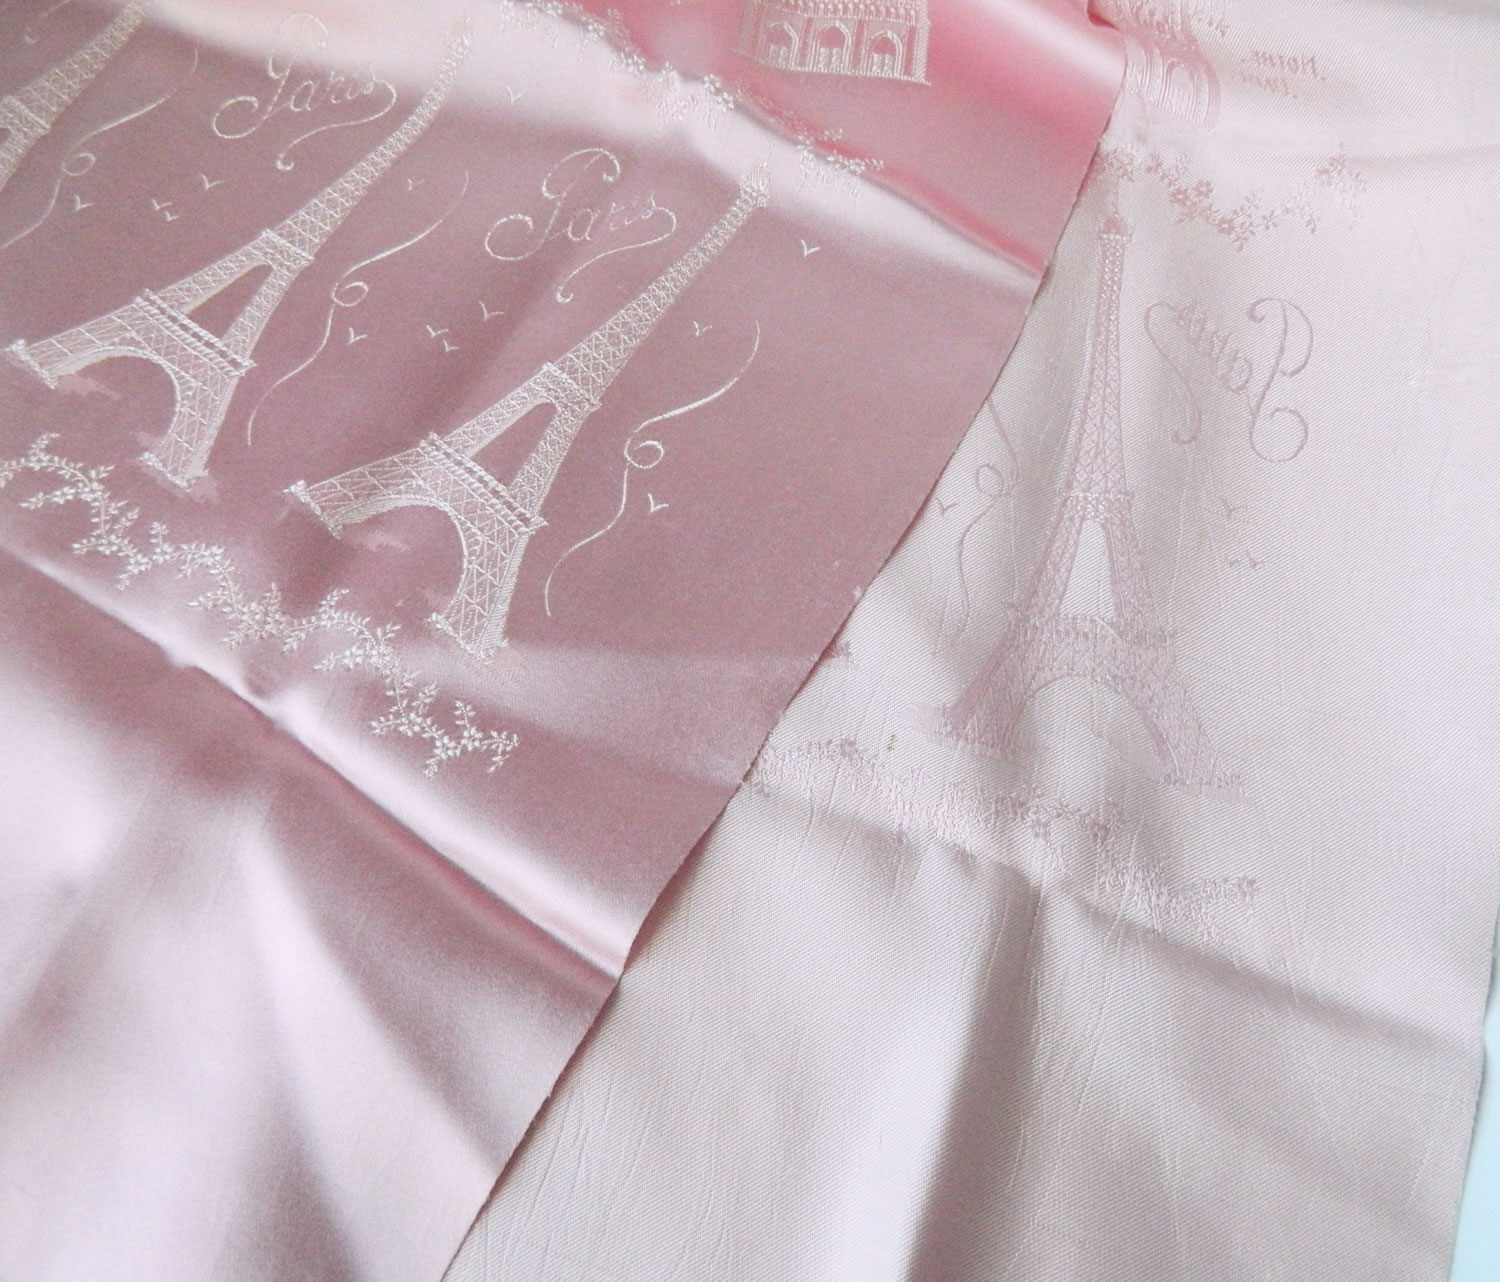 Pink silk Paris souvenir scarf